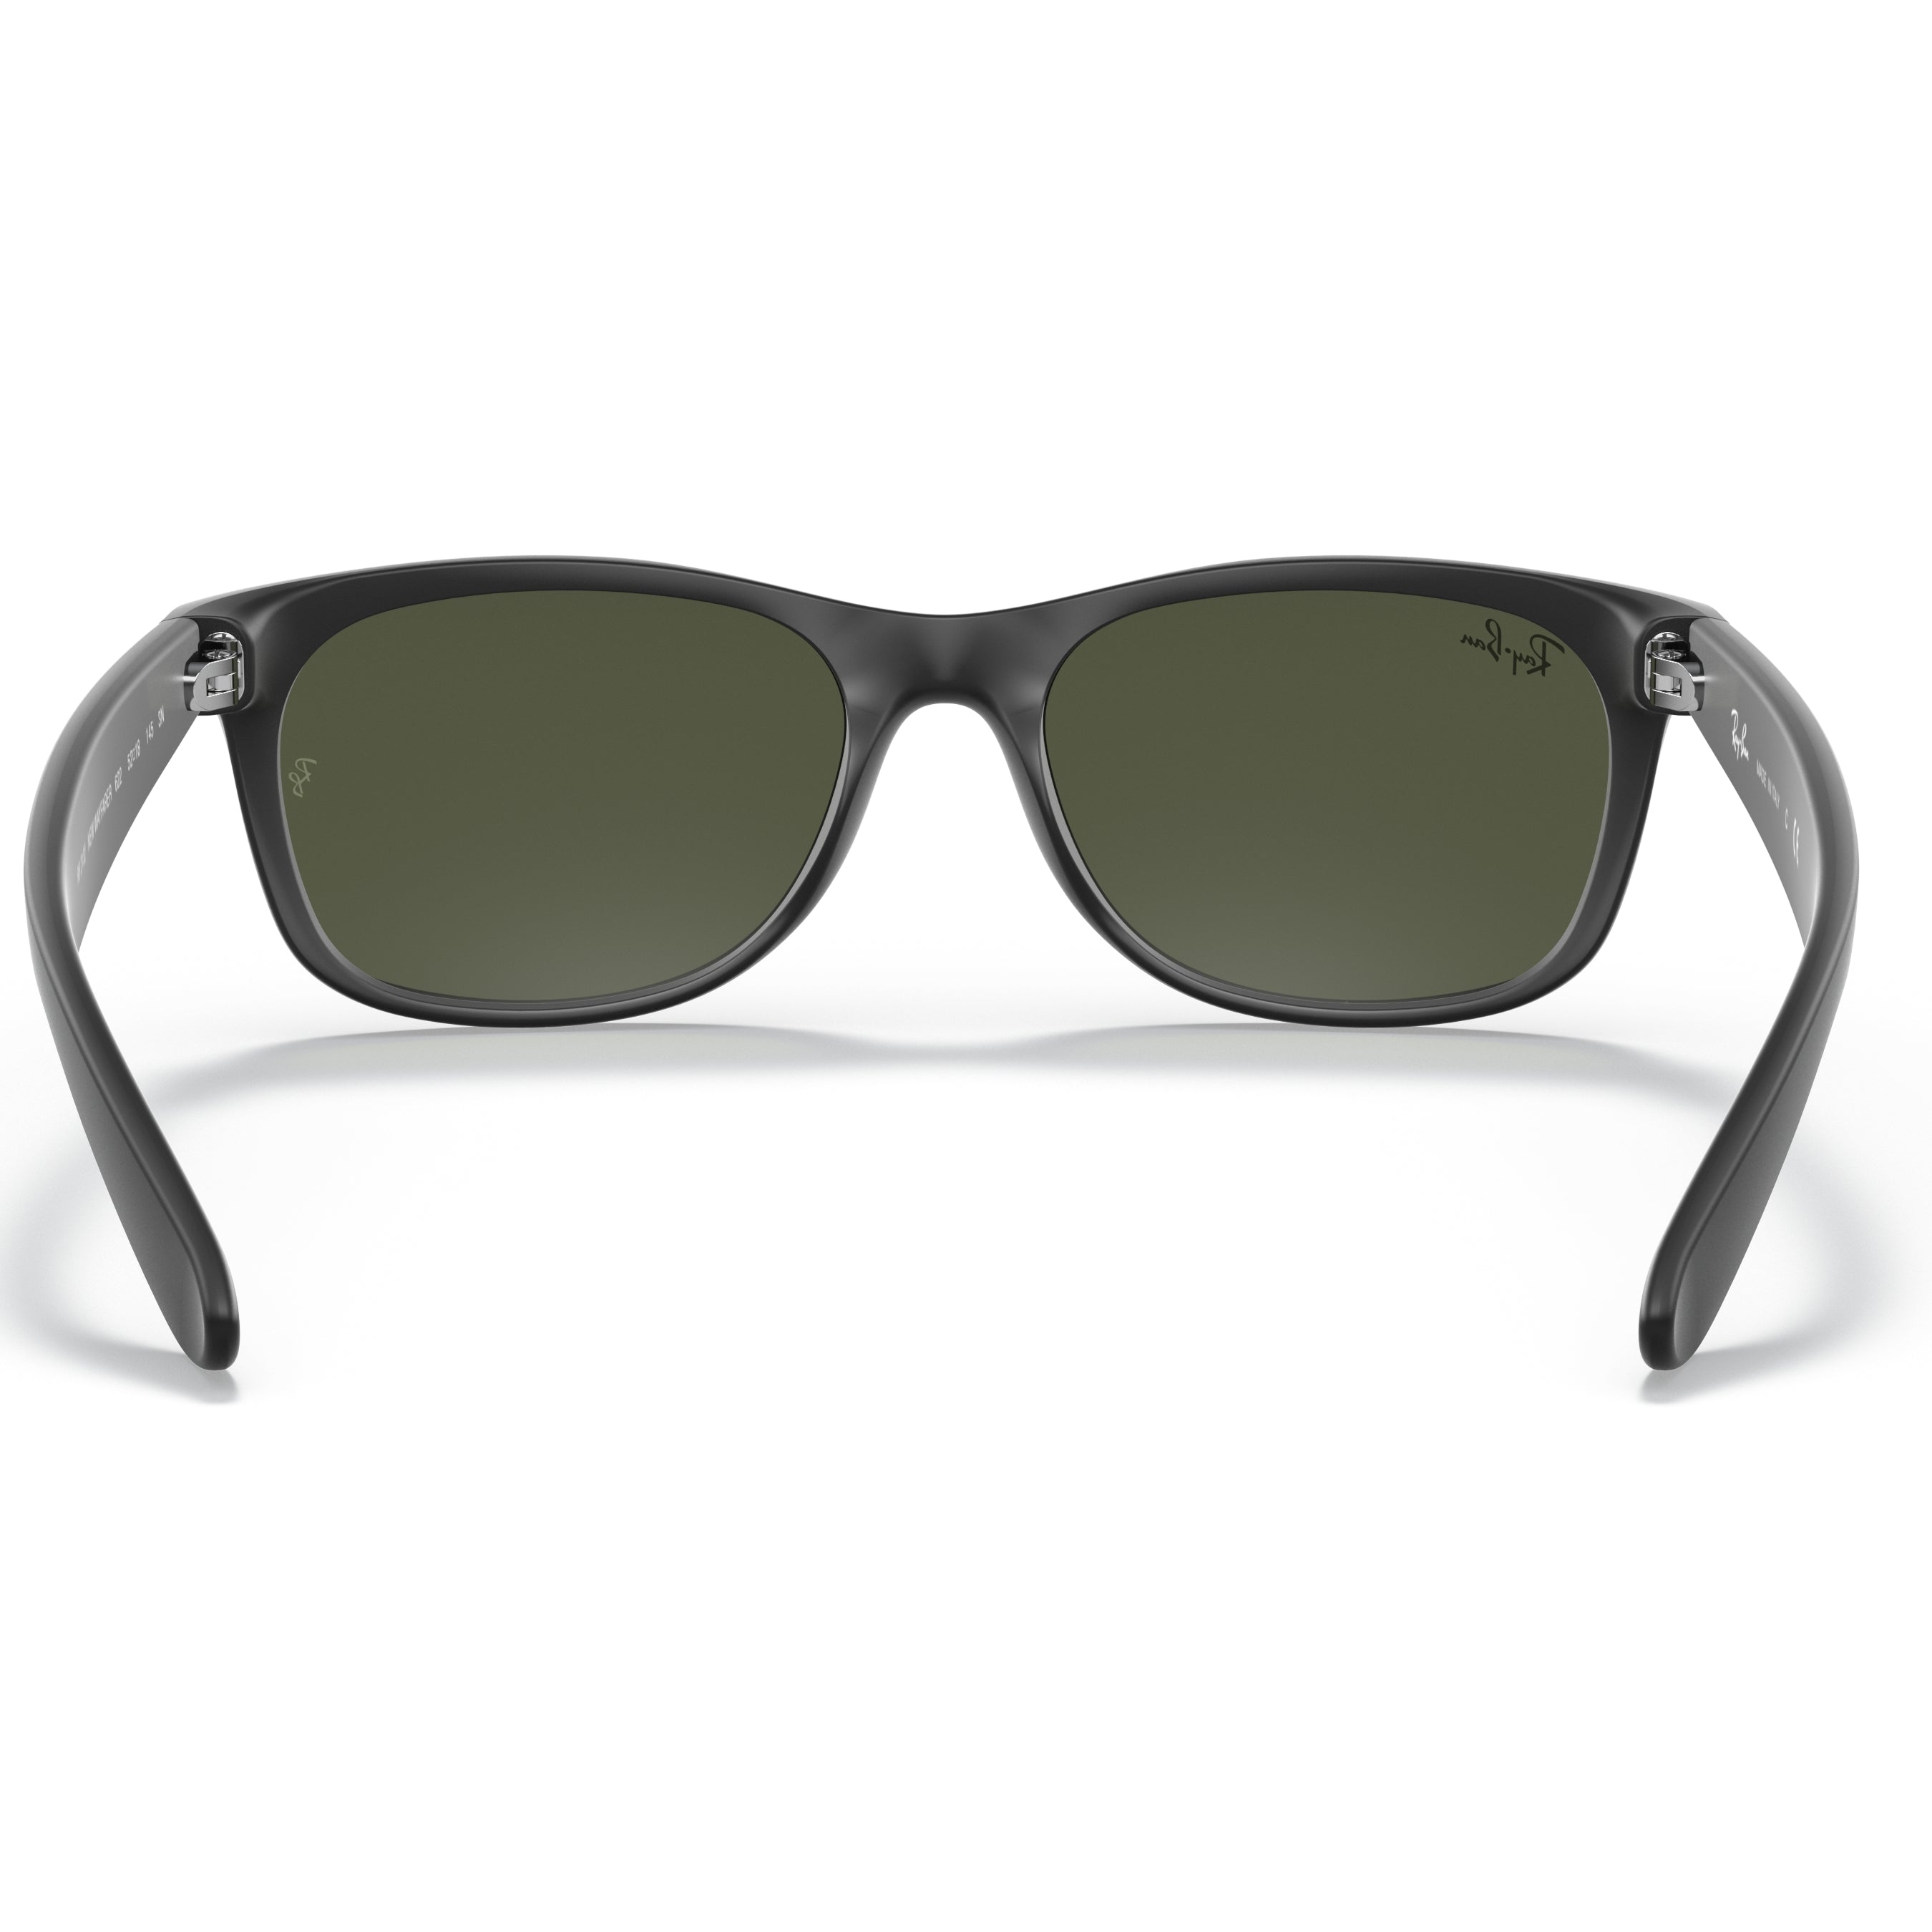 Ray-Ban Ray-Ban New Wayfarer Wayfarer Men's Sunglasses RB2132 622 52-18